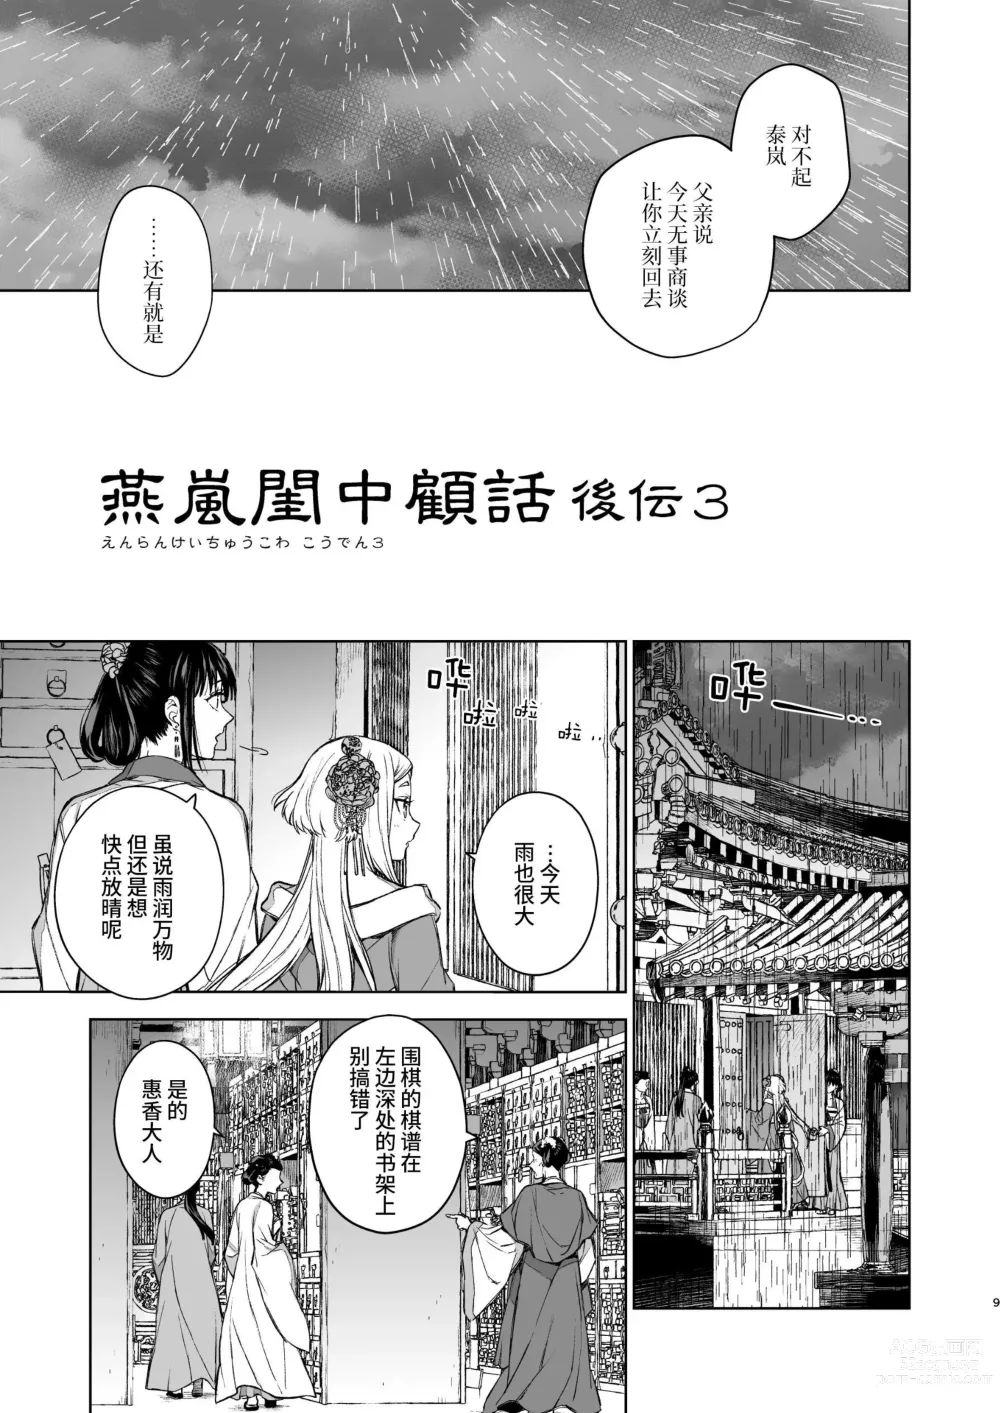 Page 9 of doujinshi 燕岚闺中顾话・后传3